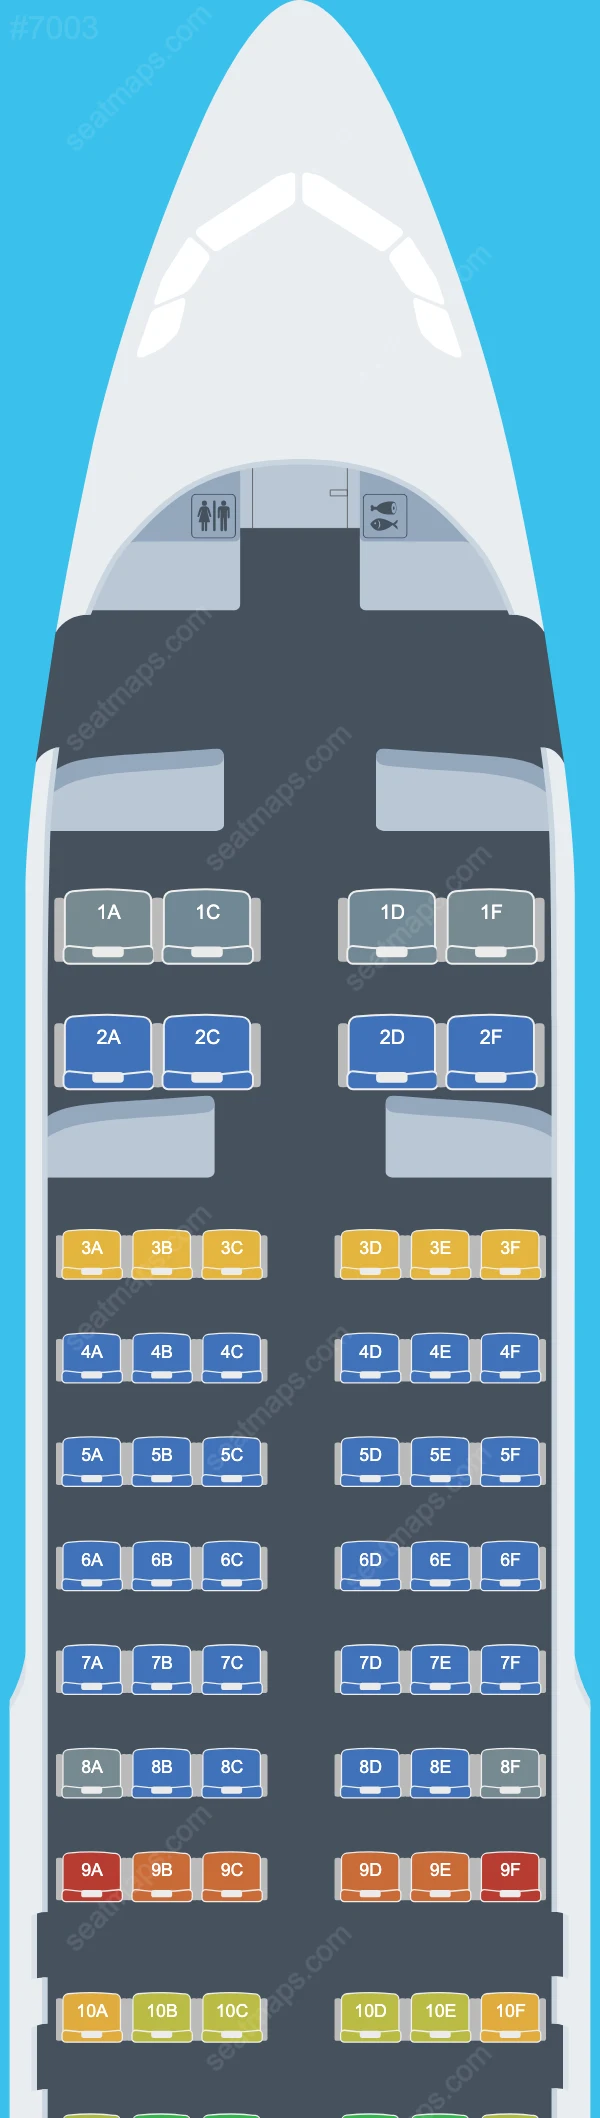 Lucky Air Airbus A320 Seat Maps A320-200 V.3